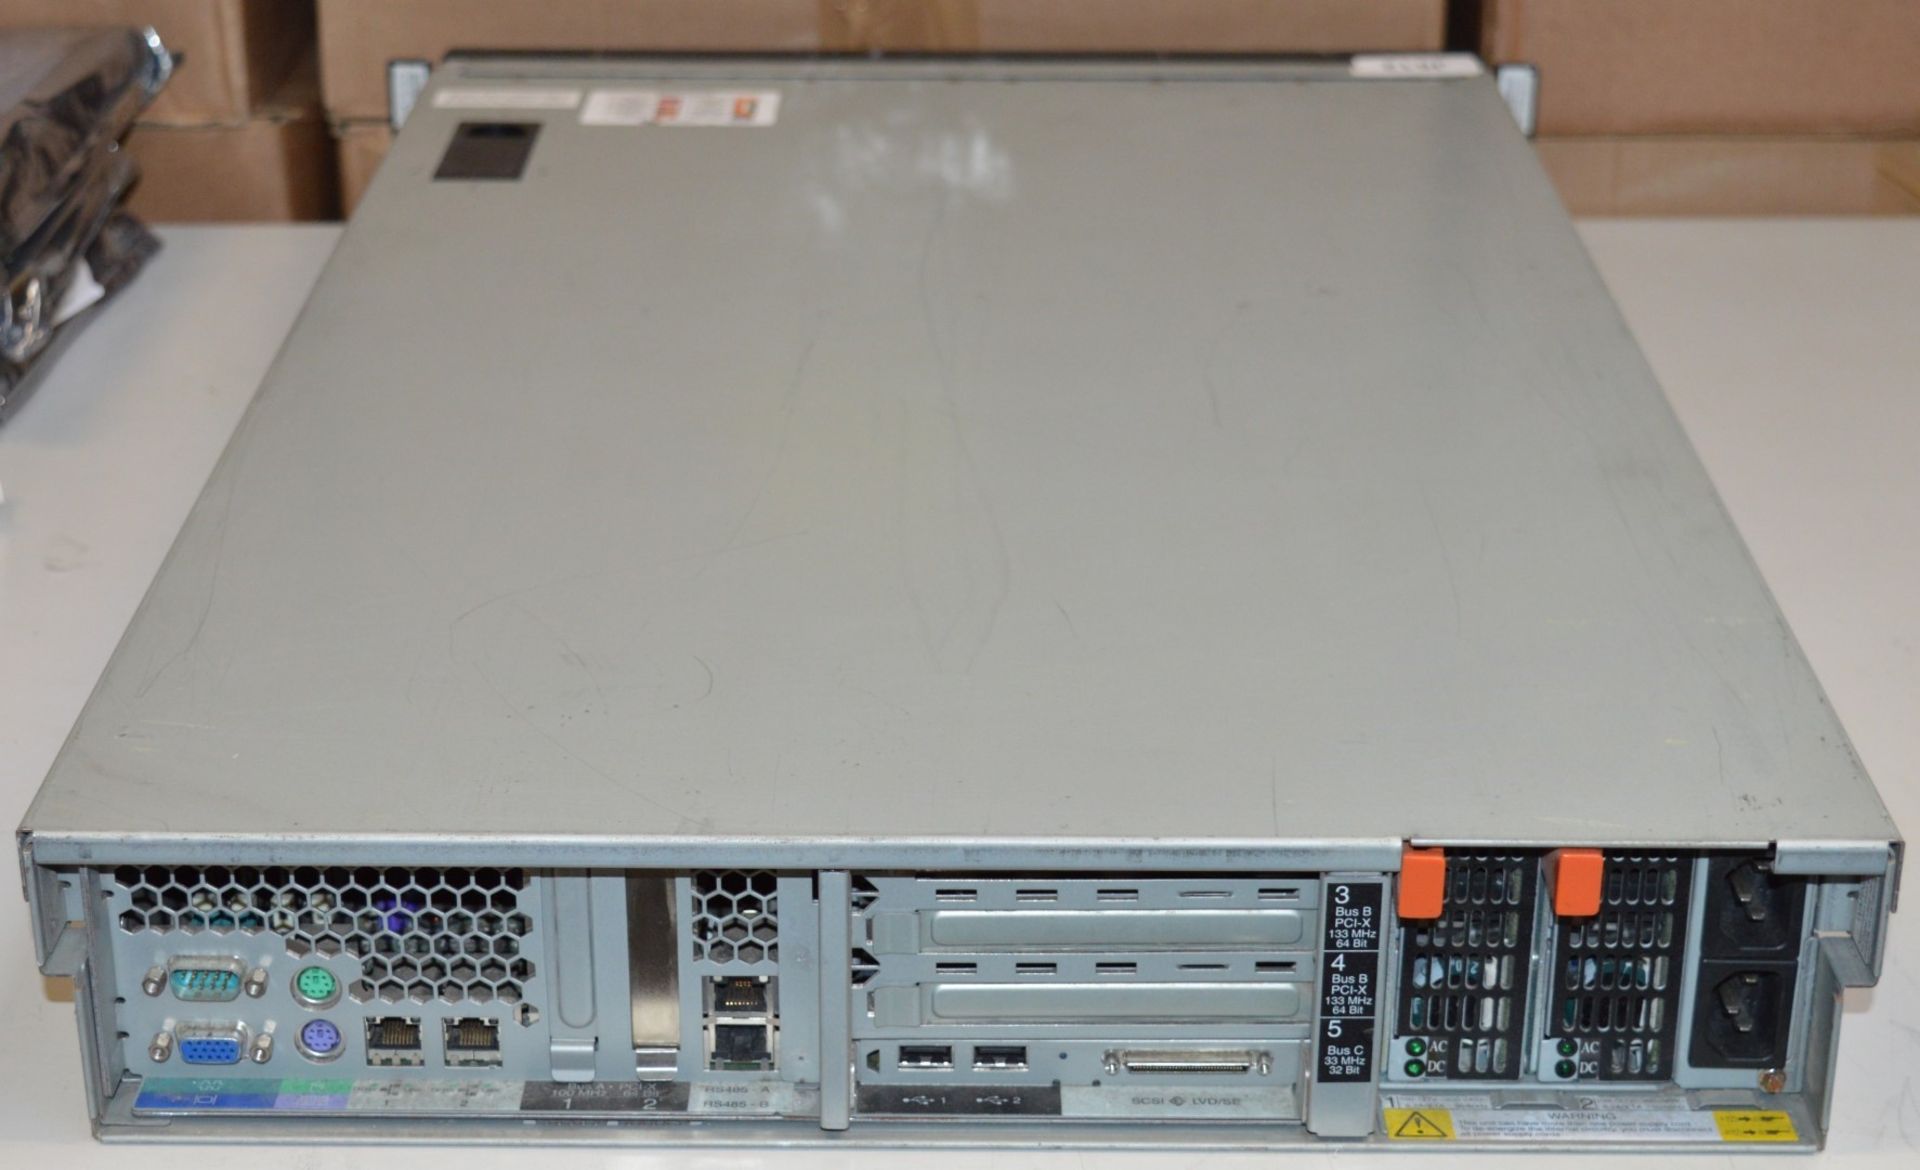 1 x IBM xSeries 345 Server - Includes Dual Xeon Processors, 1gb Ram, Raid Card - Hard Disk Drives - Image 3 of 8